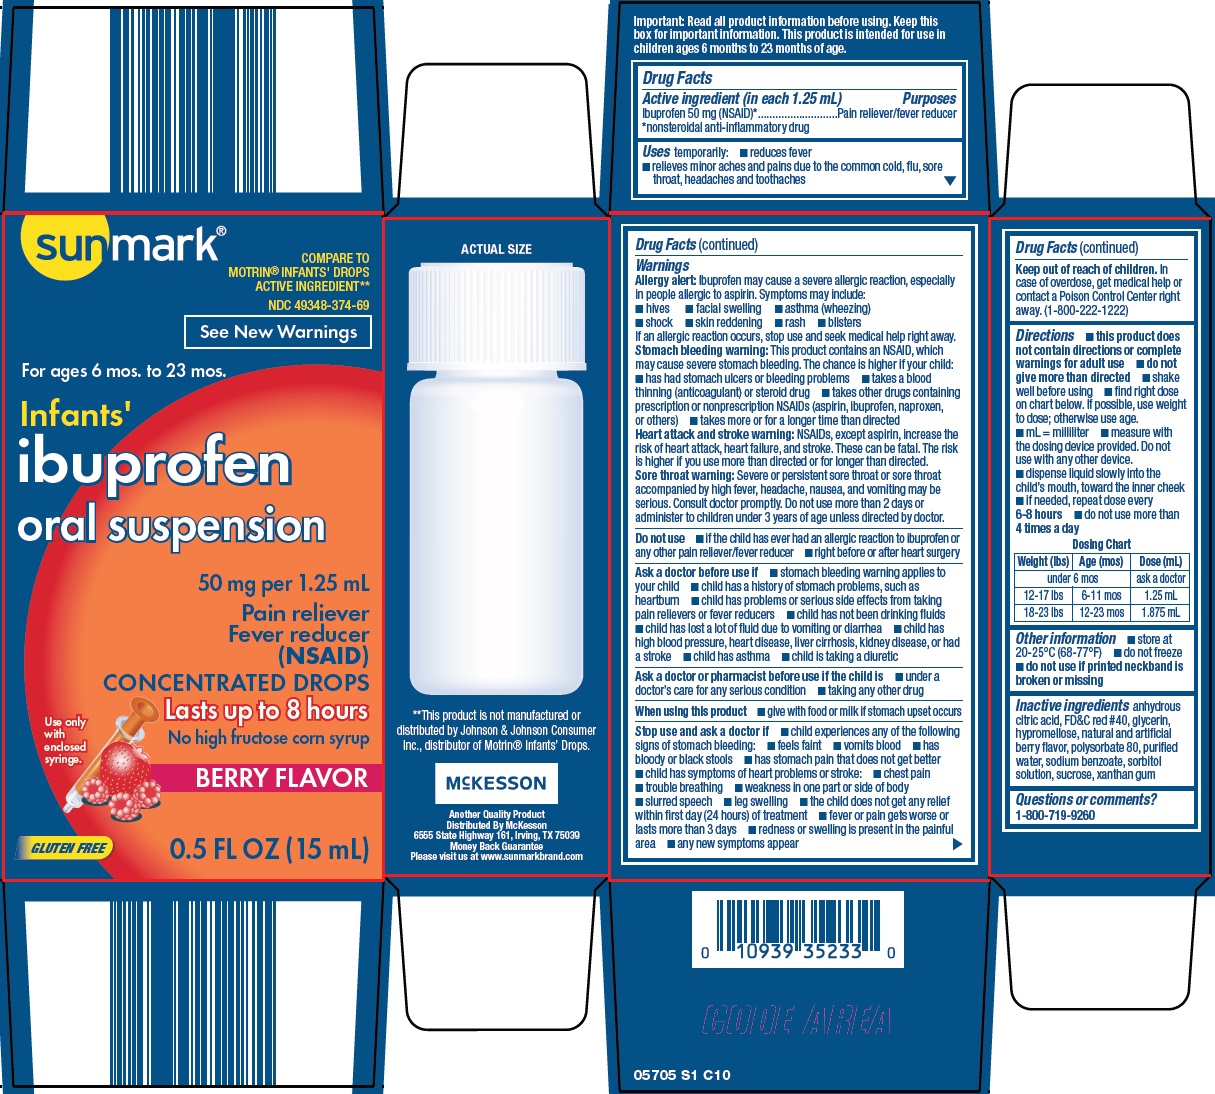 057-s1-ibuprofen-oral-suspension.jpg